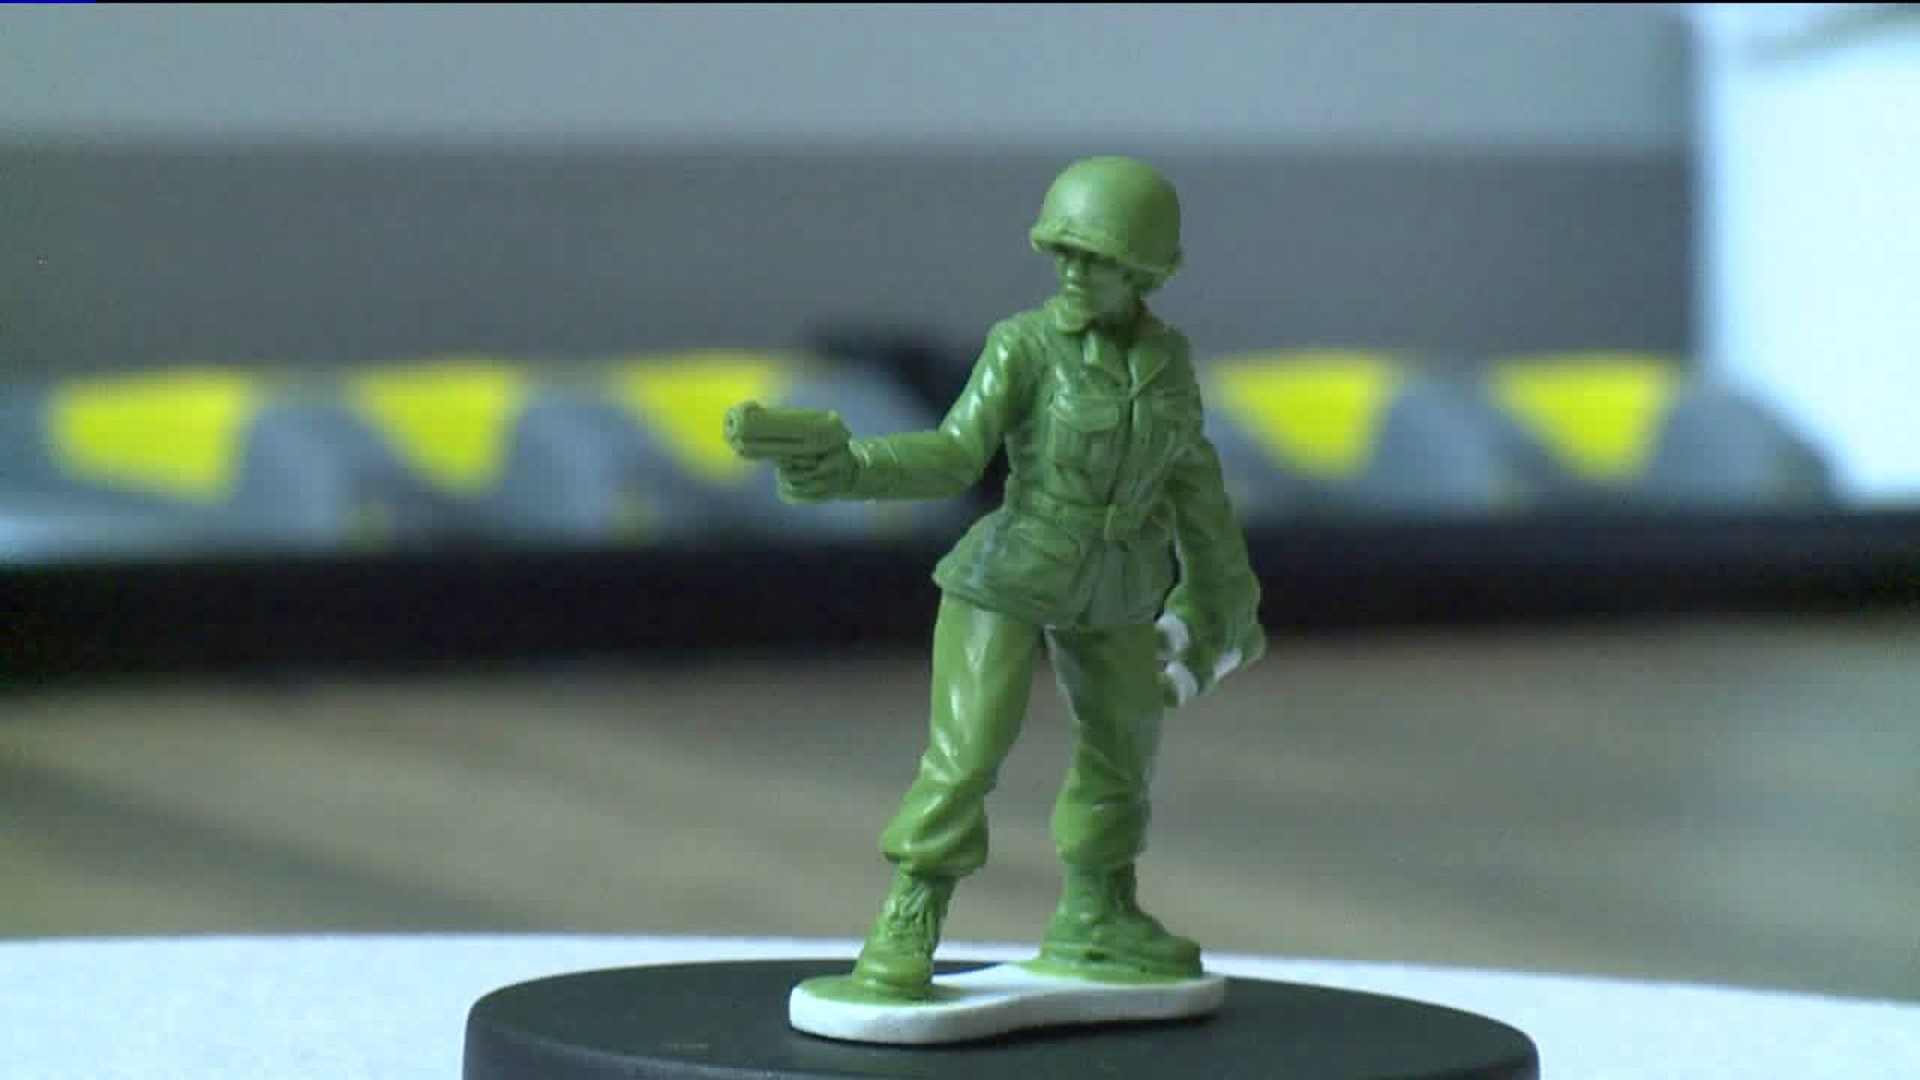 Breaking the Mold: Scranton Toy Company Making Army Women